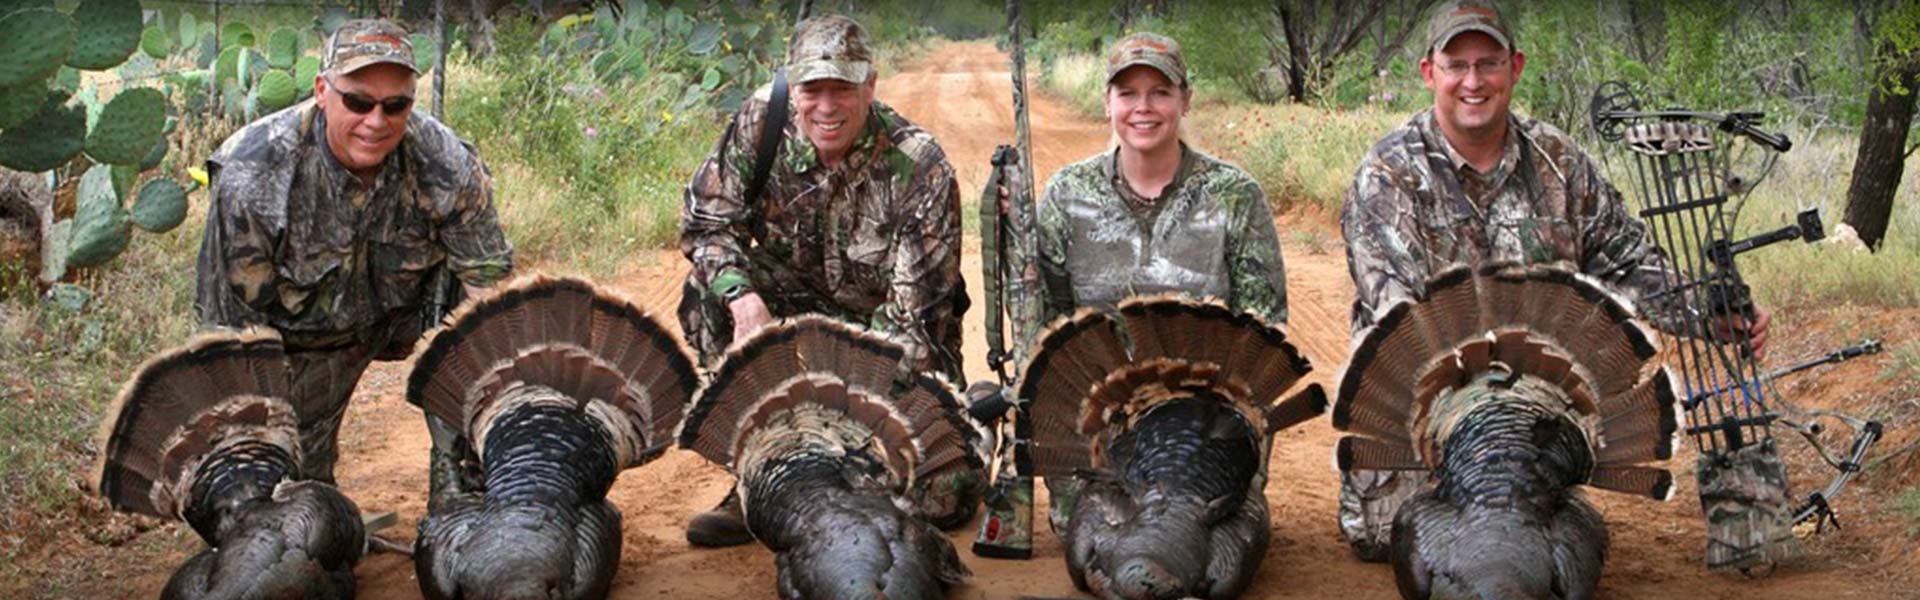 South Texas Turkey Hunts